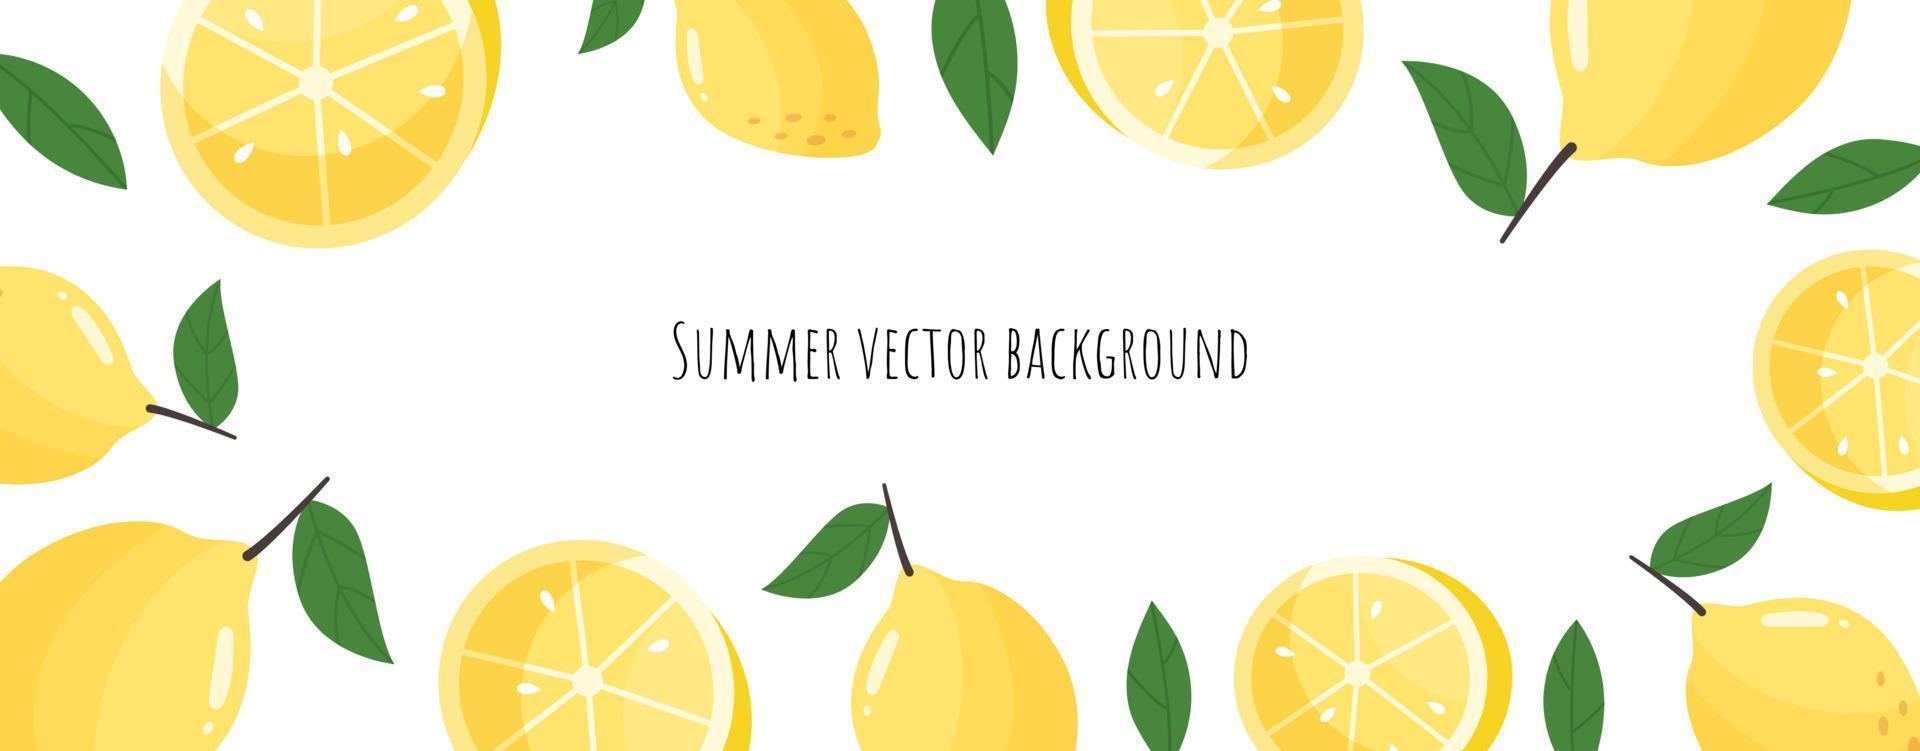 Colorful summer background design banner with lemons vector